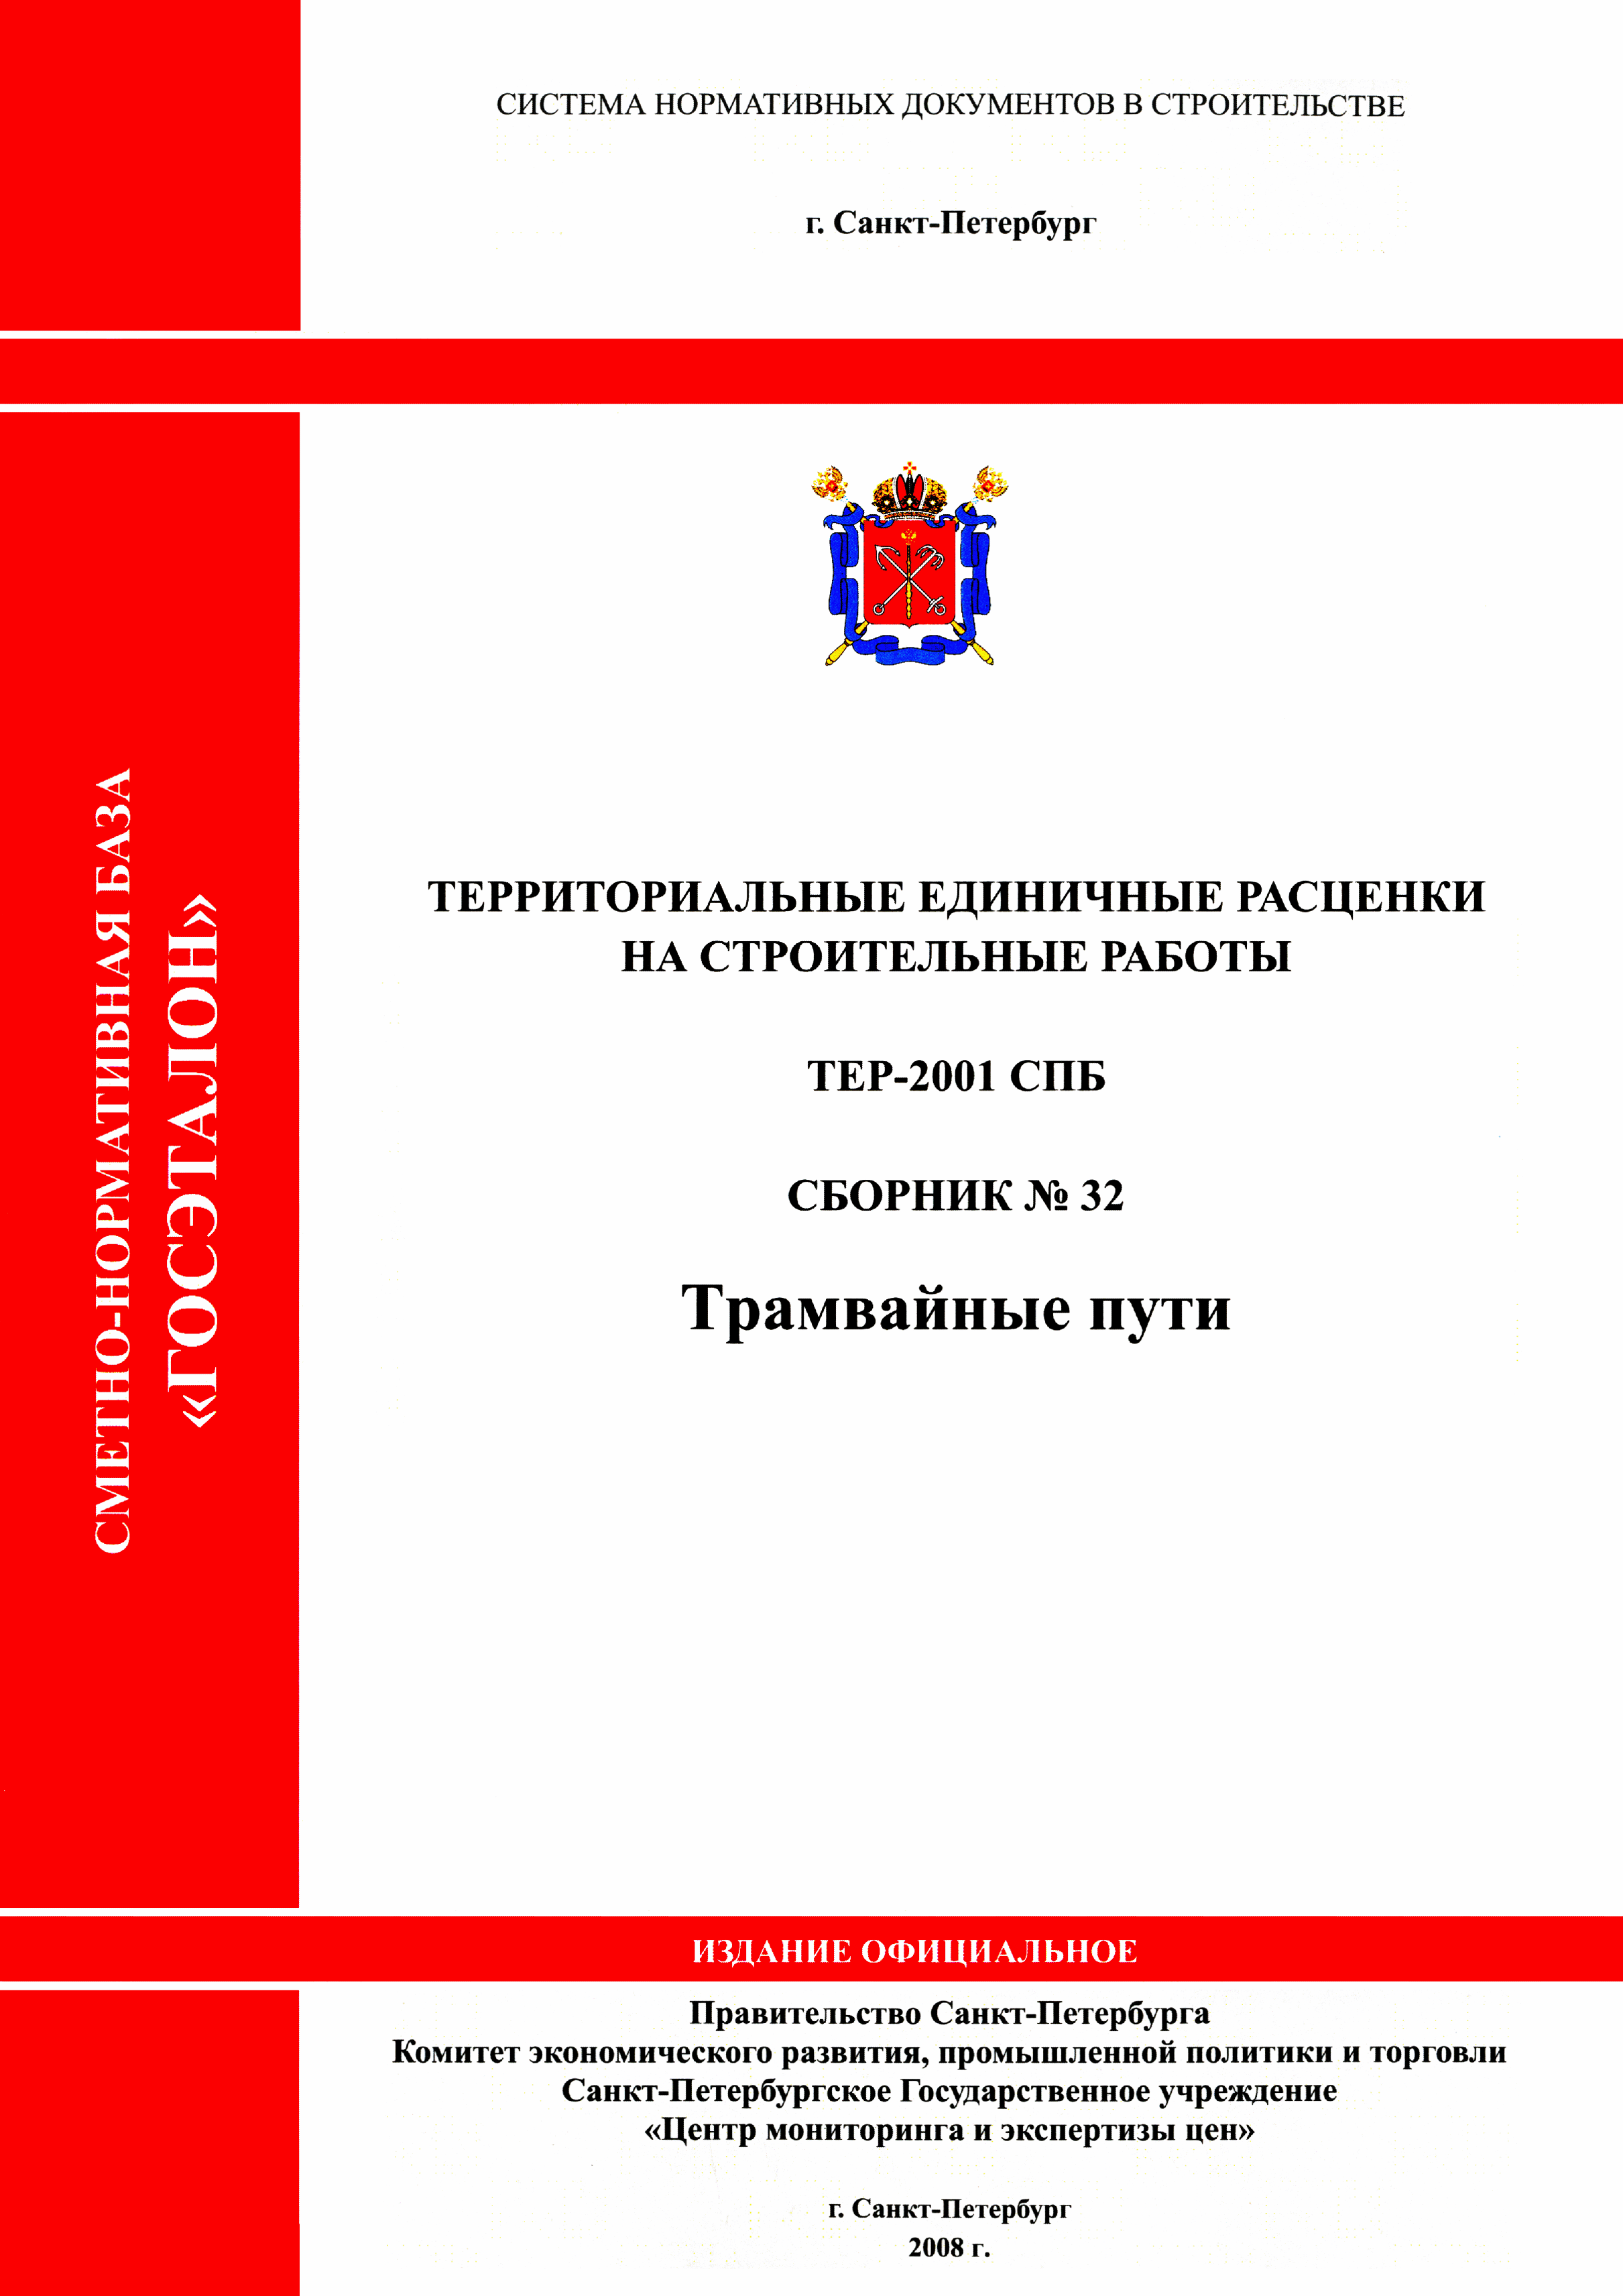 ТЕР 2001-32 СПб